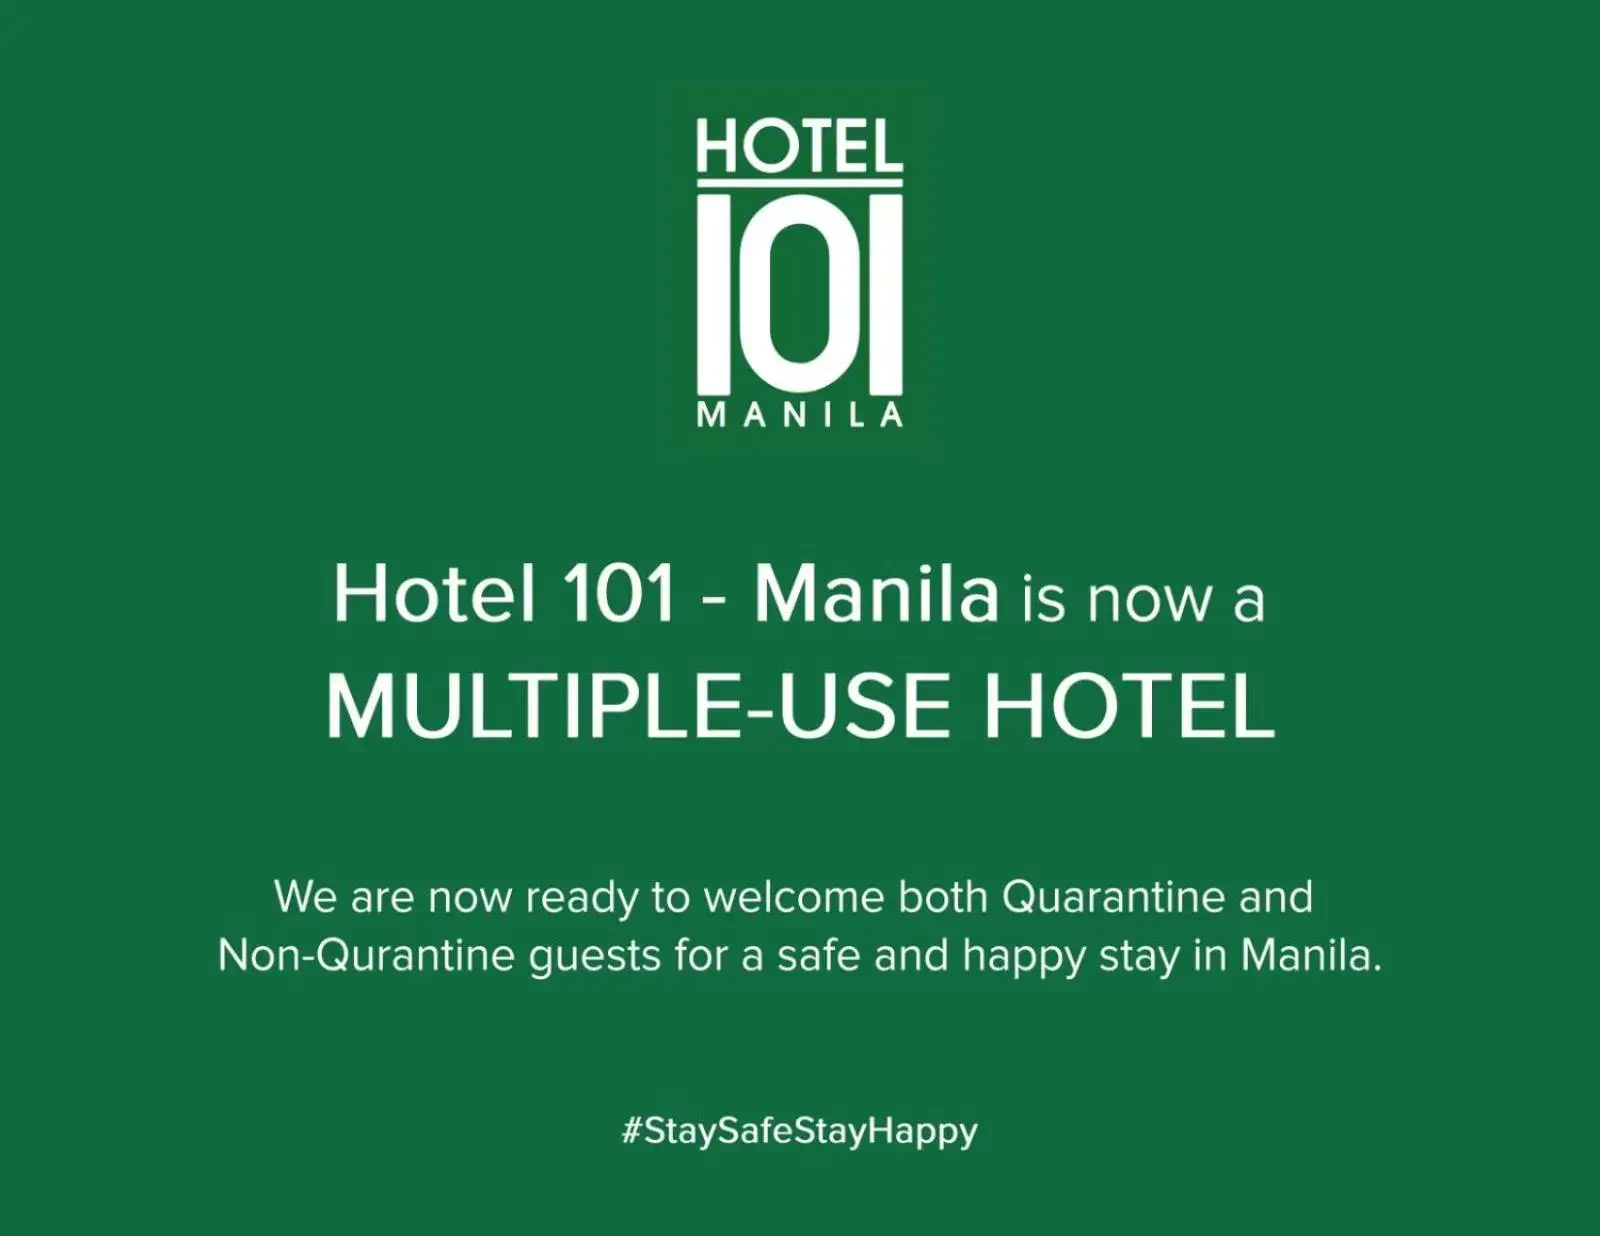 Property logo or sign in Hotel 101 - Manila